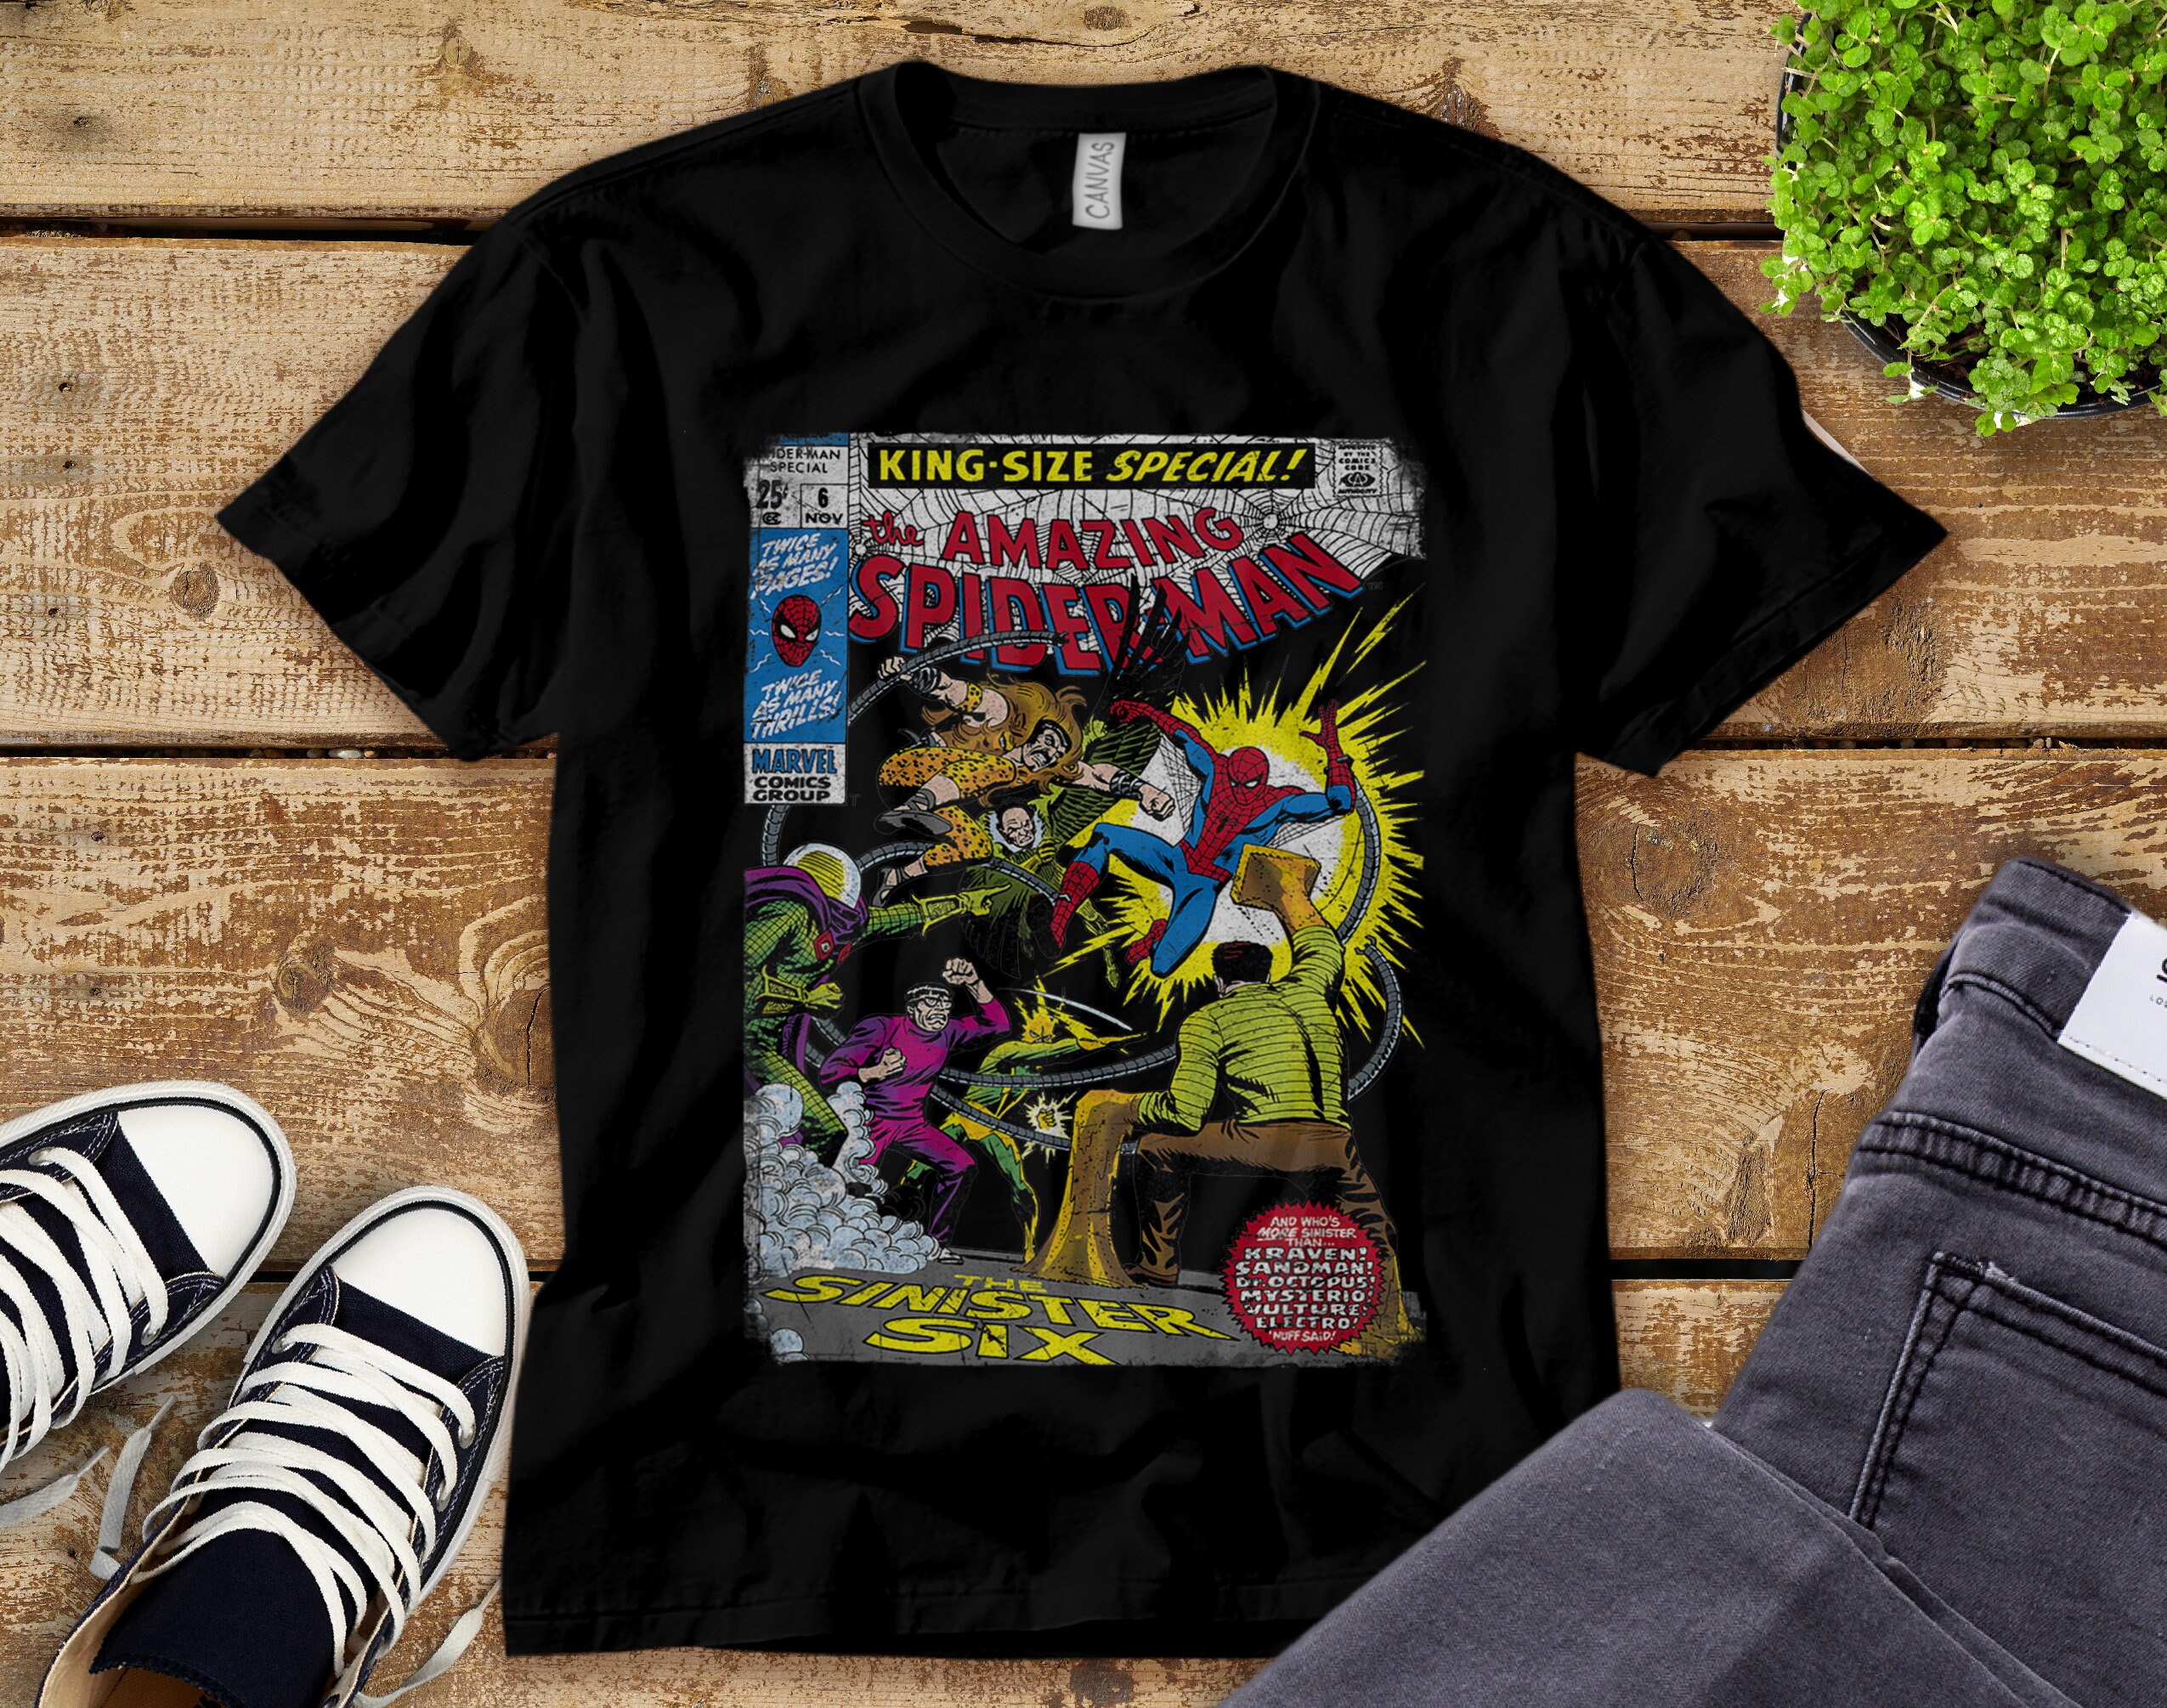 Marvel Spider-man Sinister Six Comic T-shirt Unisex Tee Adult | Etsy